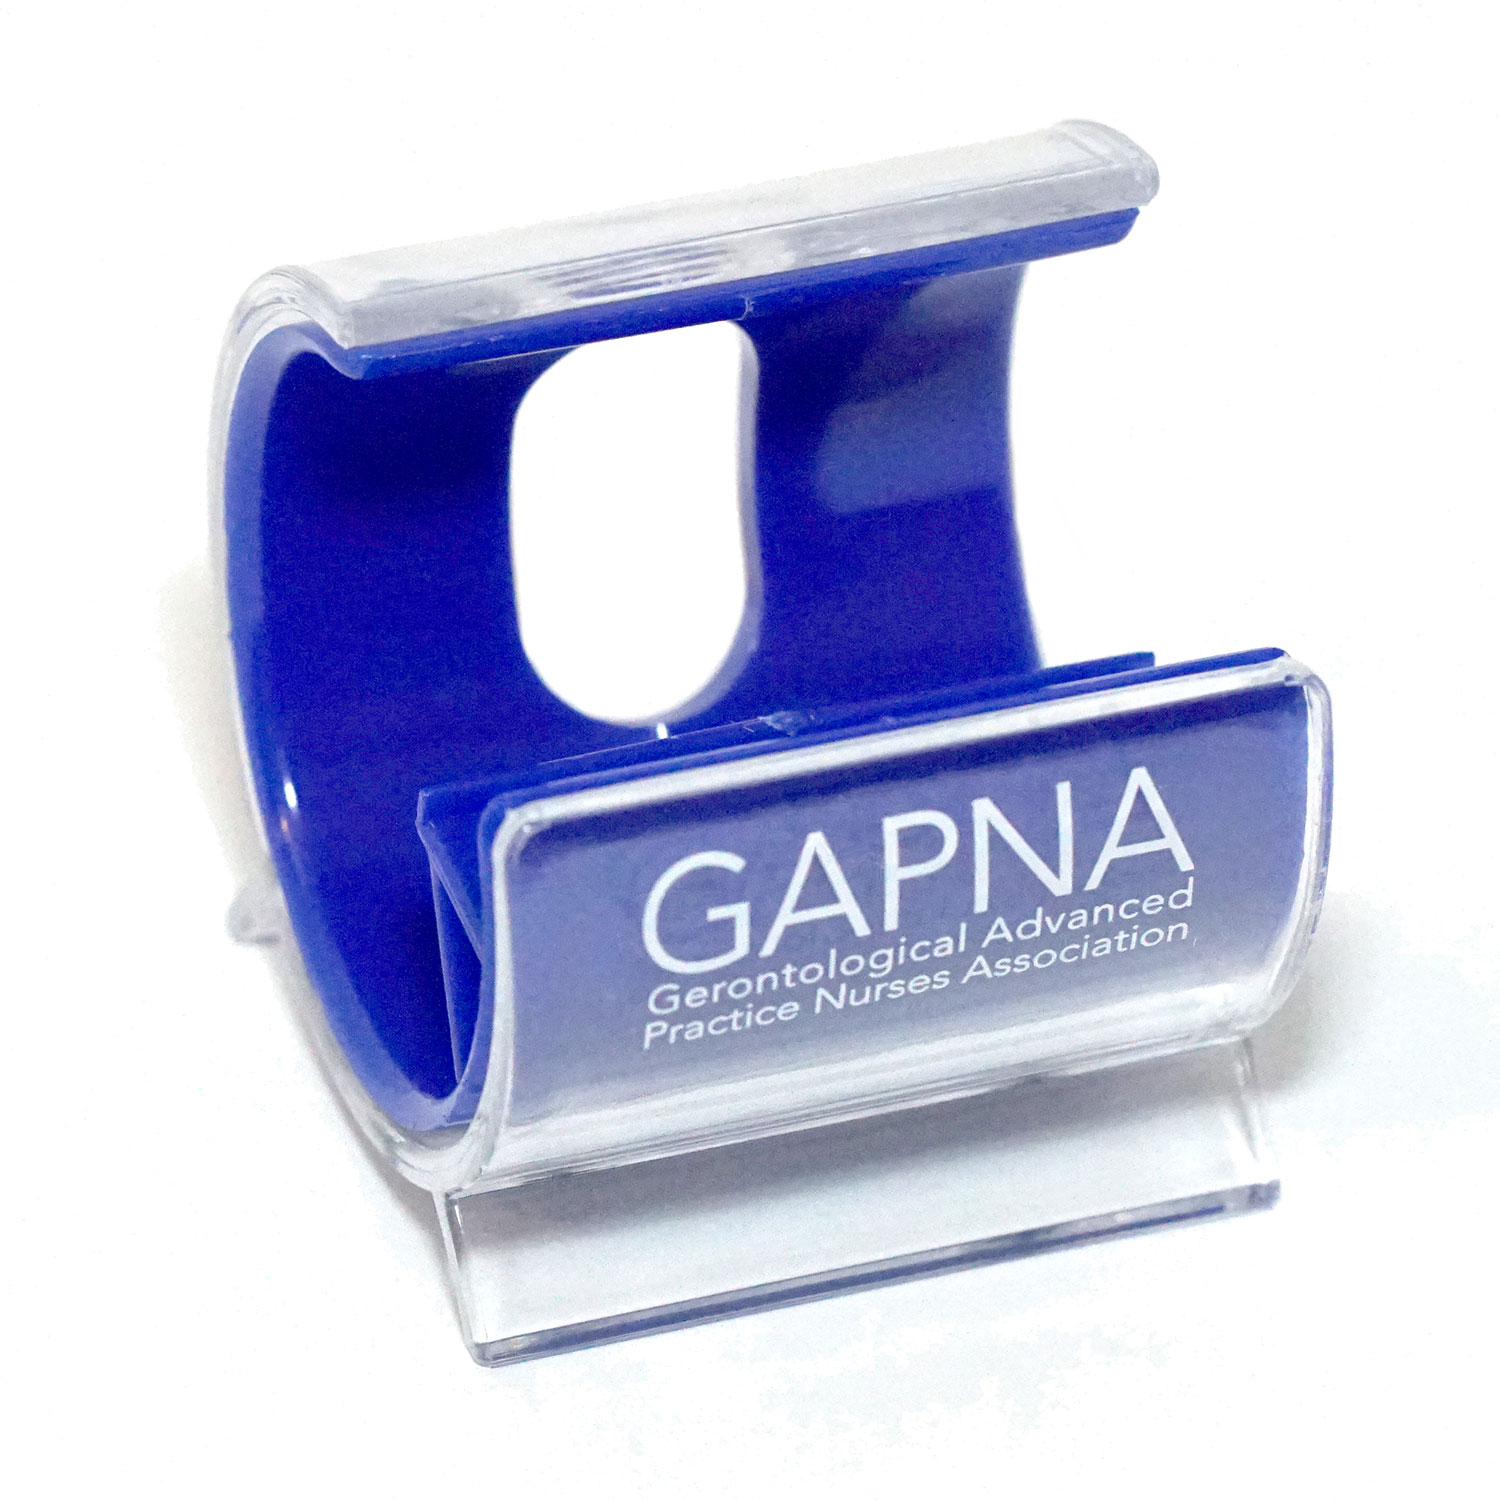 GAPNA iStand Phone Holder (bag of 10)